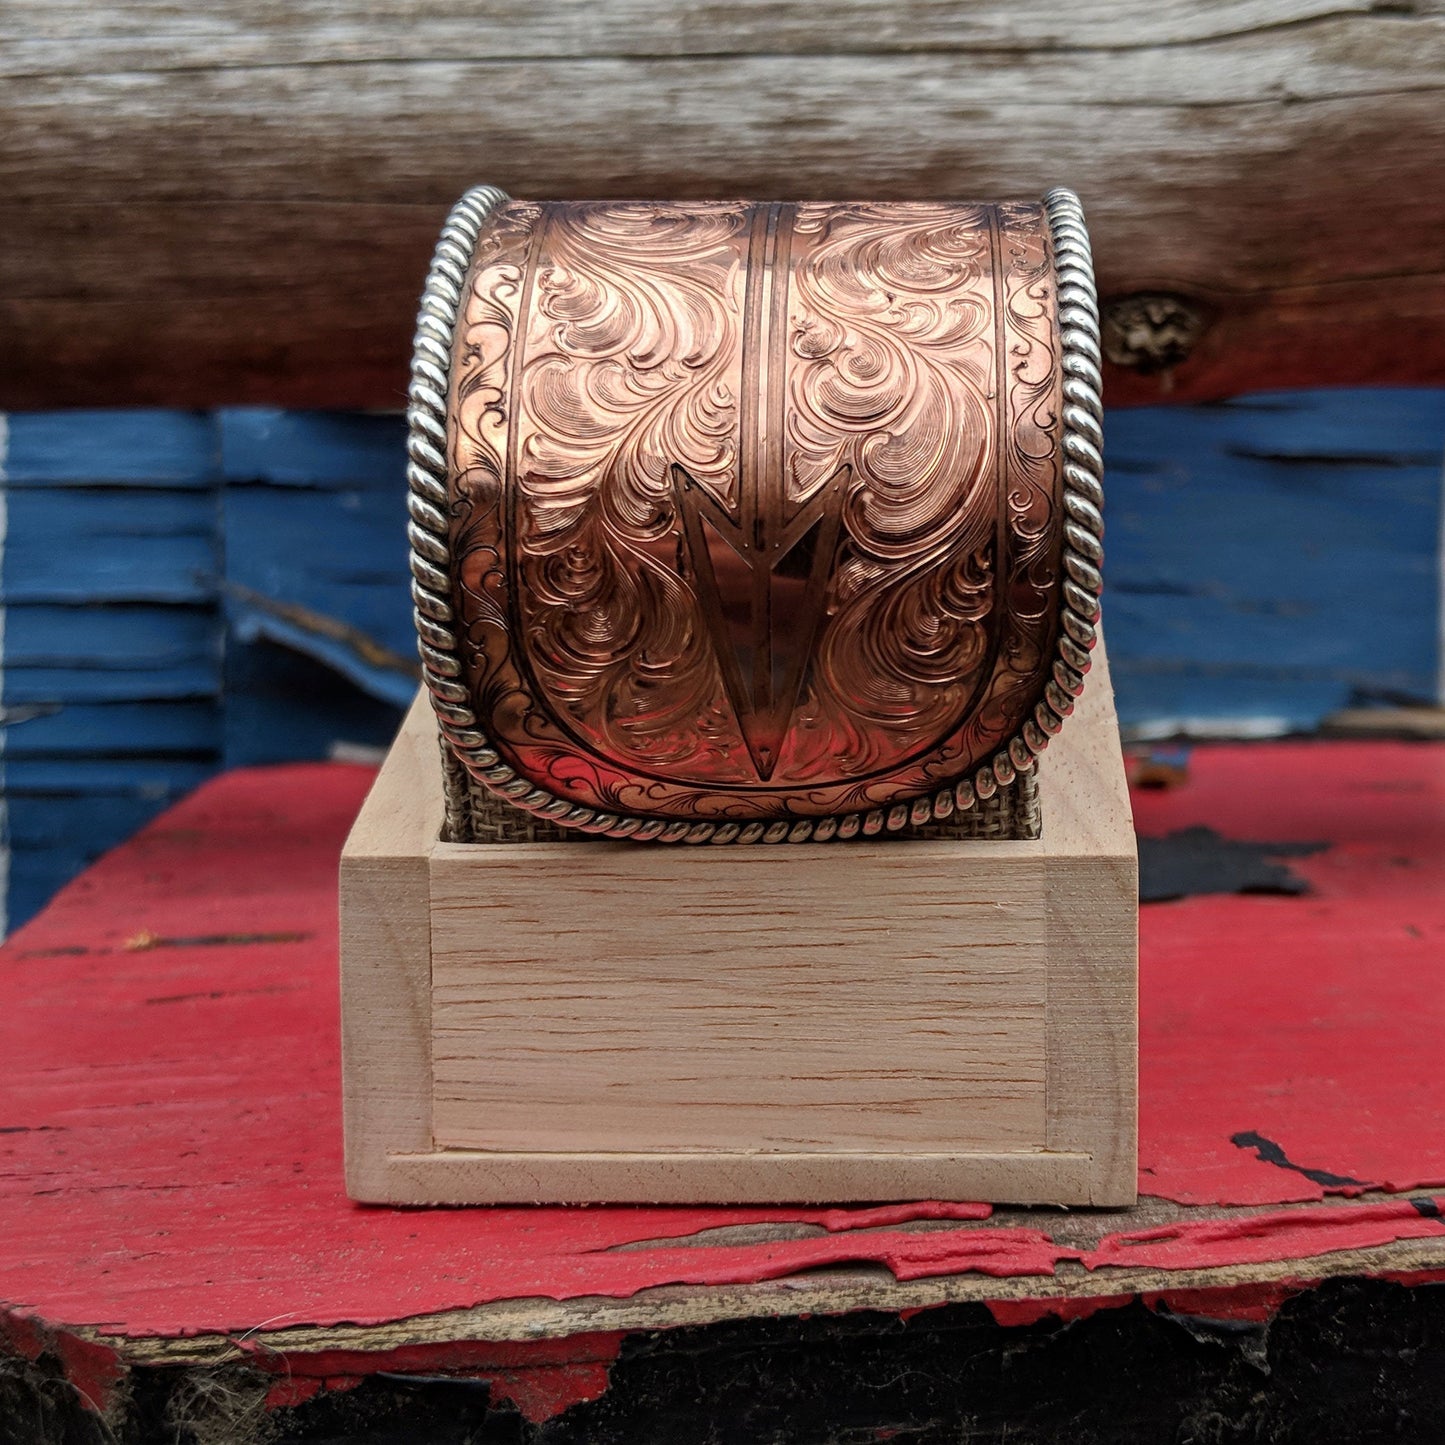 Copper Engraved Bracelet, Sterling Silver Rope Edge, Cuff Style, Western Bracelet Design BRC00020 by Loreena Rose